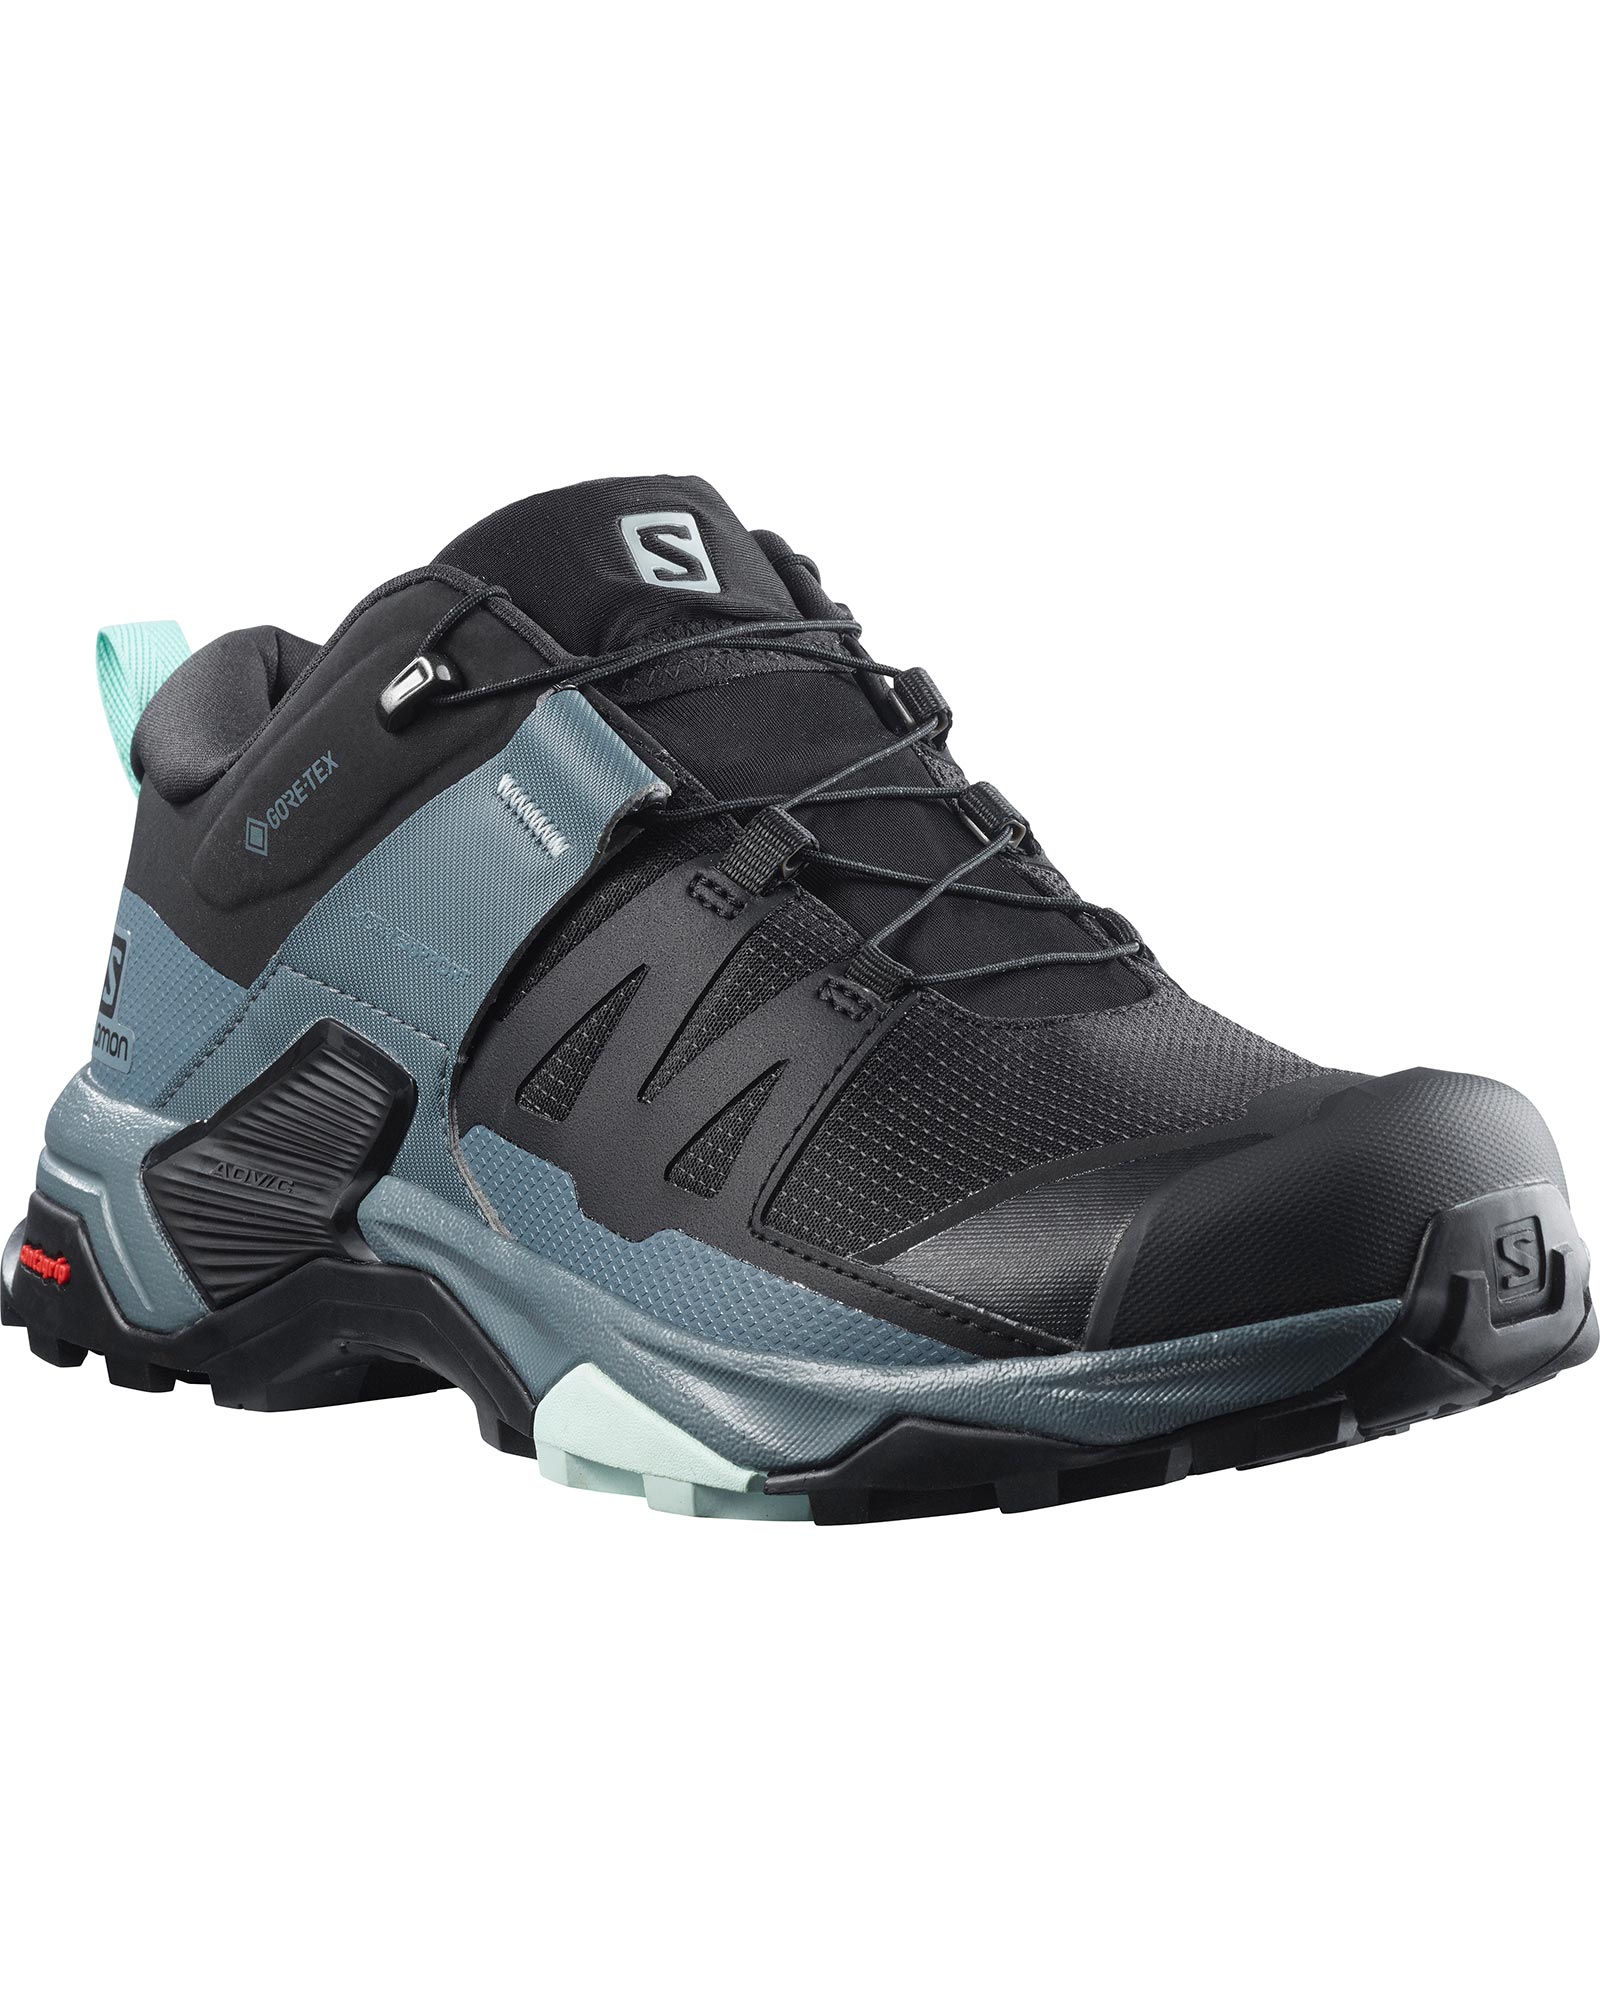 Salomon X Ultra 4 GORE TEX Women’s Shoes - Black/Stormy Weather/Opal Blue UK 8